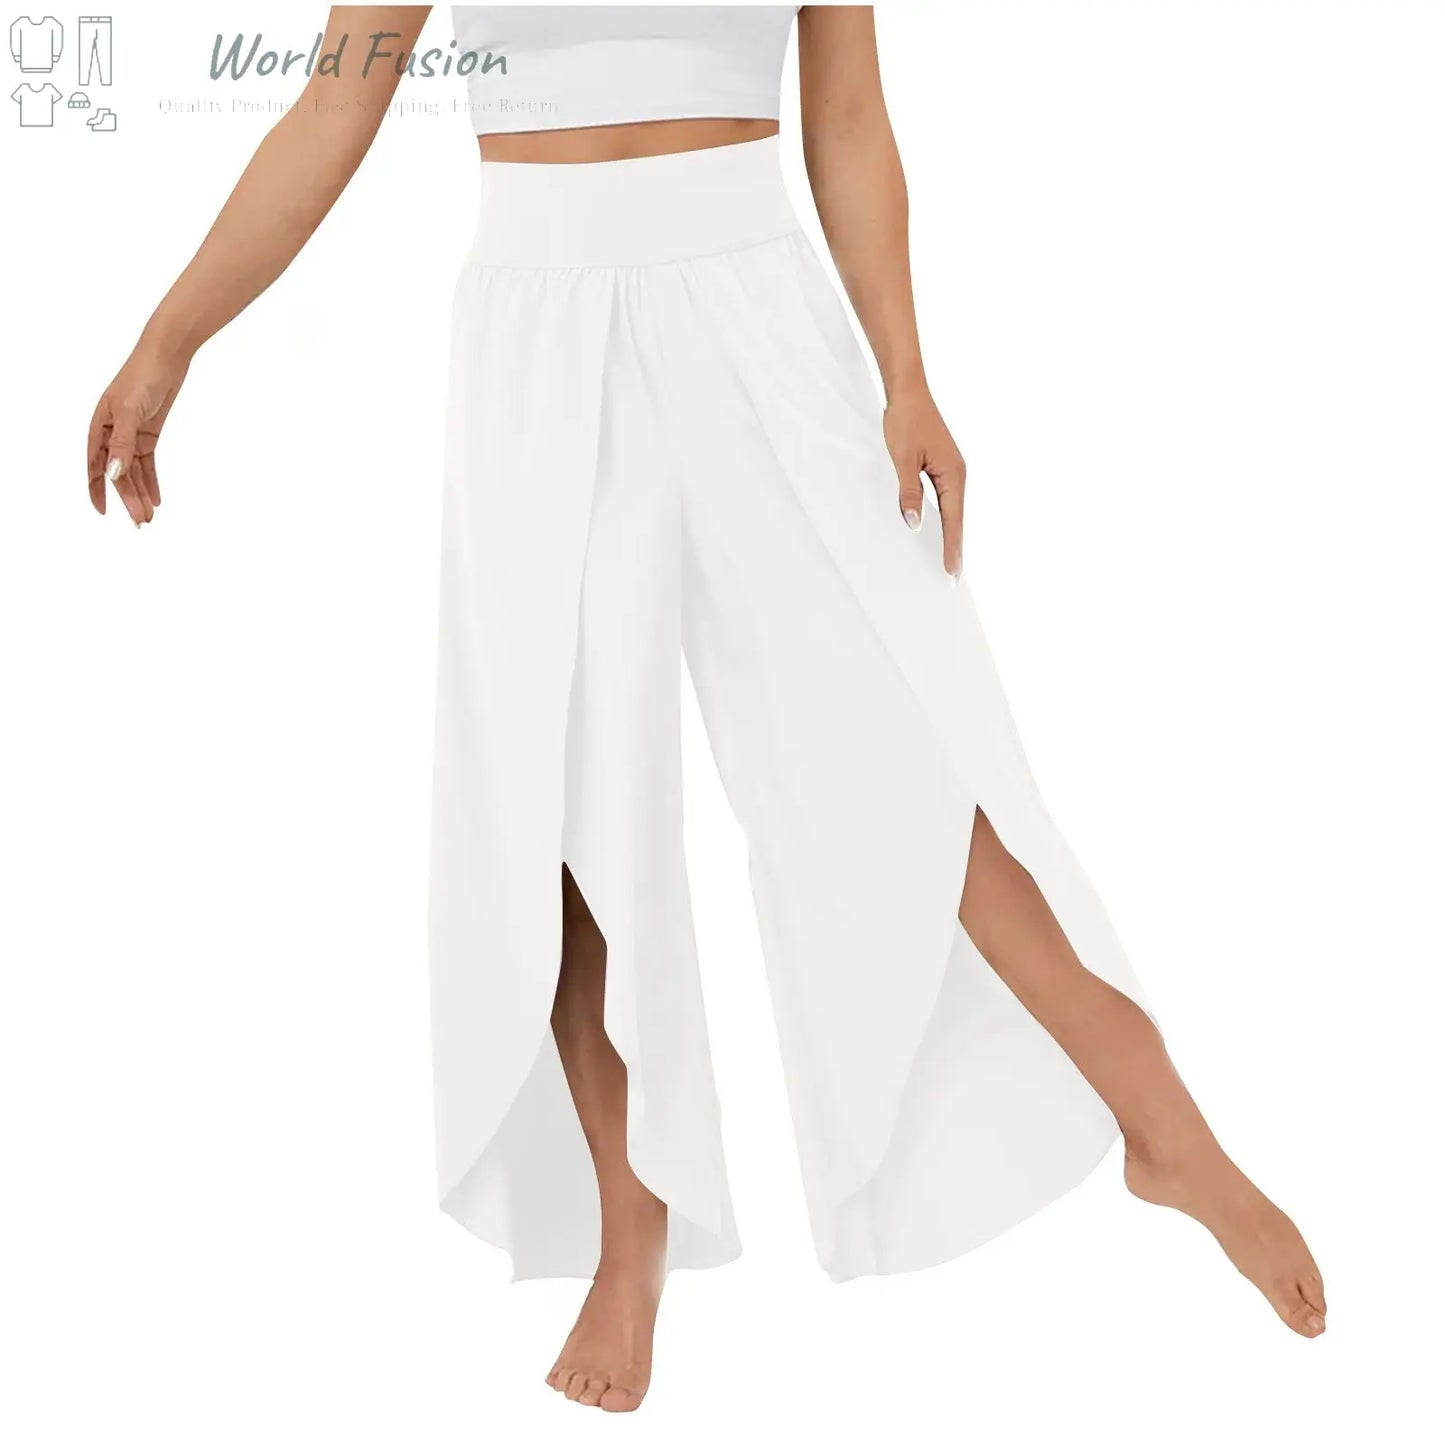 Loose Split Yoga Pants Summer Elastic High Waist Wide Leg Trousers Women's Fashion Versatile Clothing - World Fusion